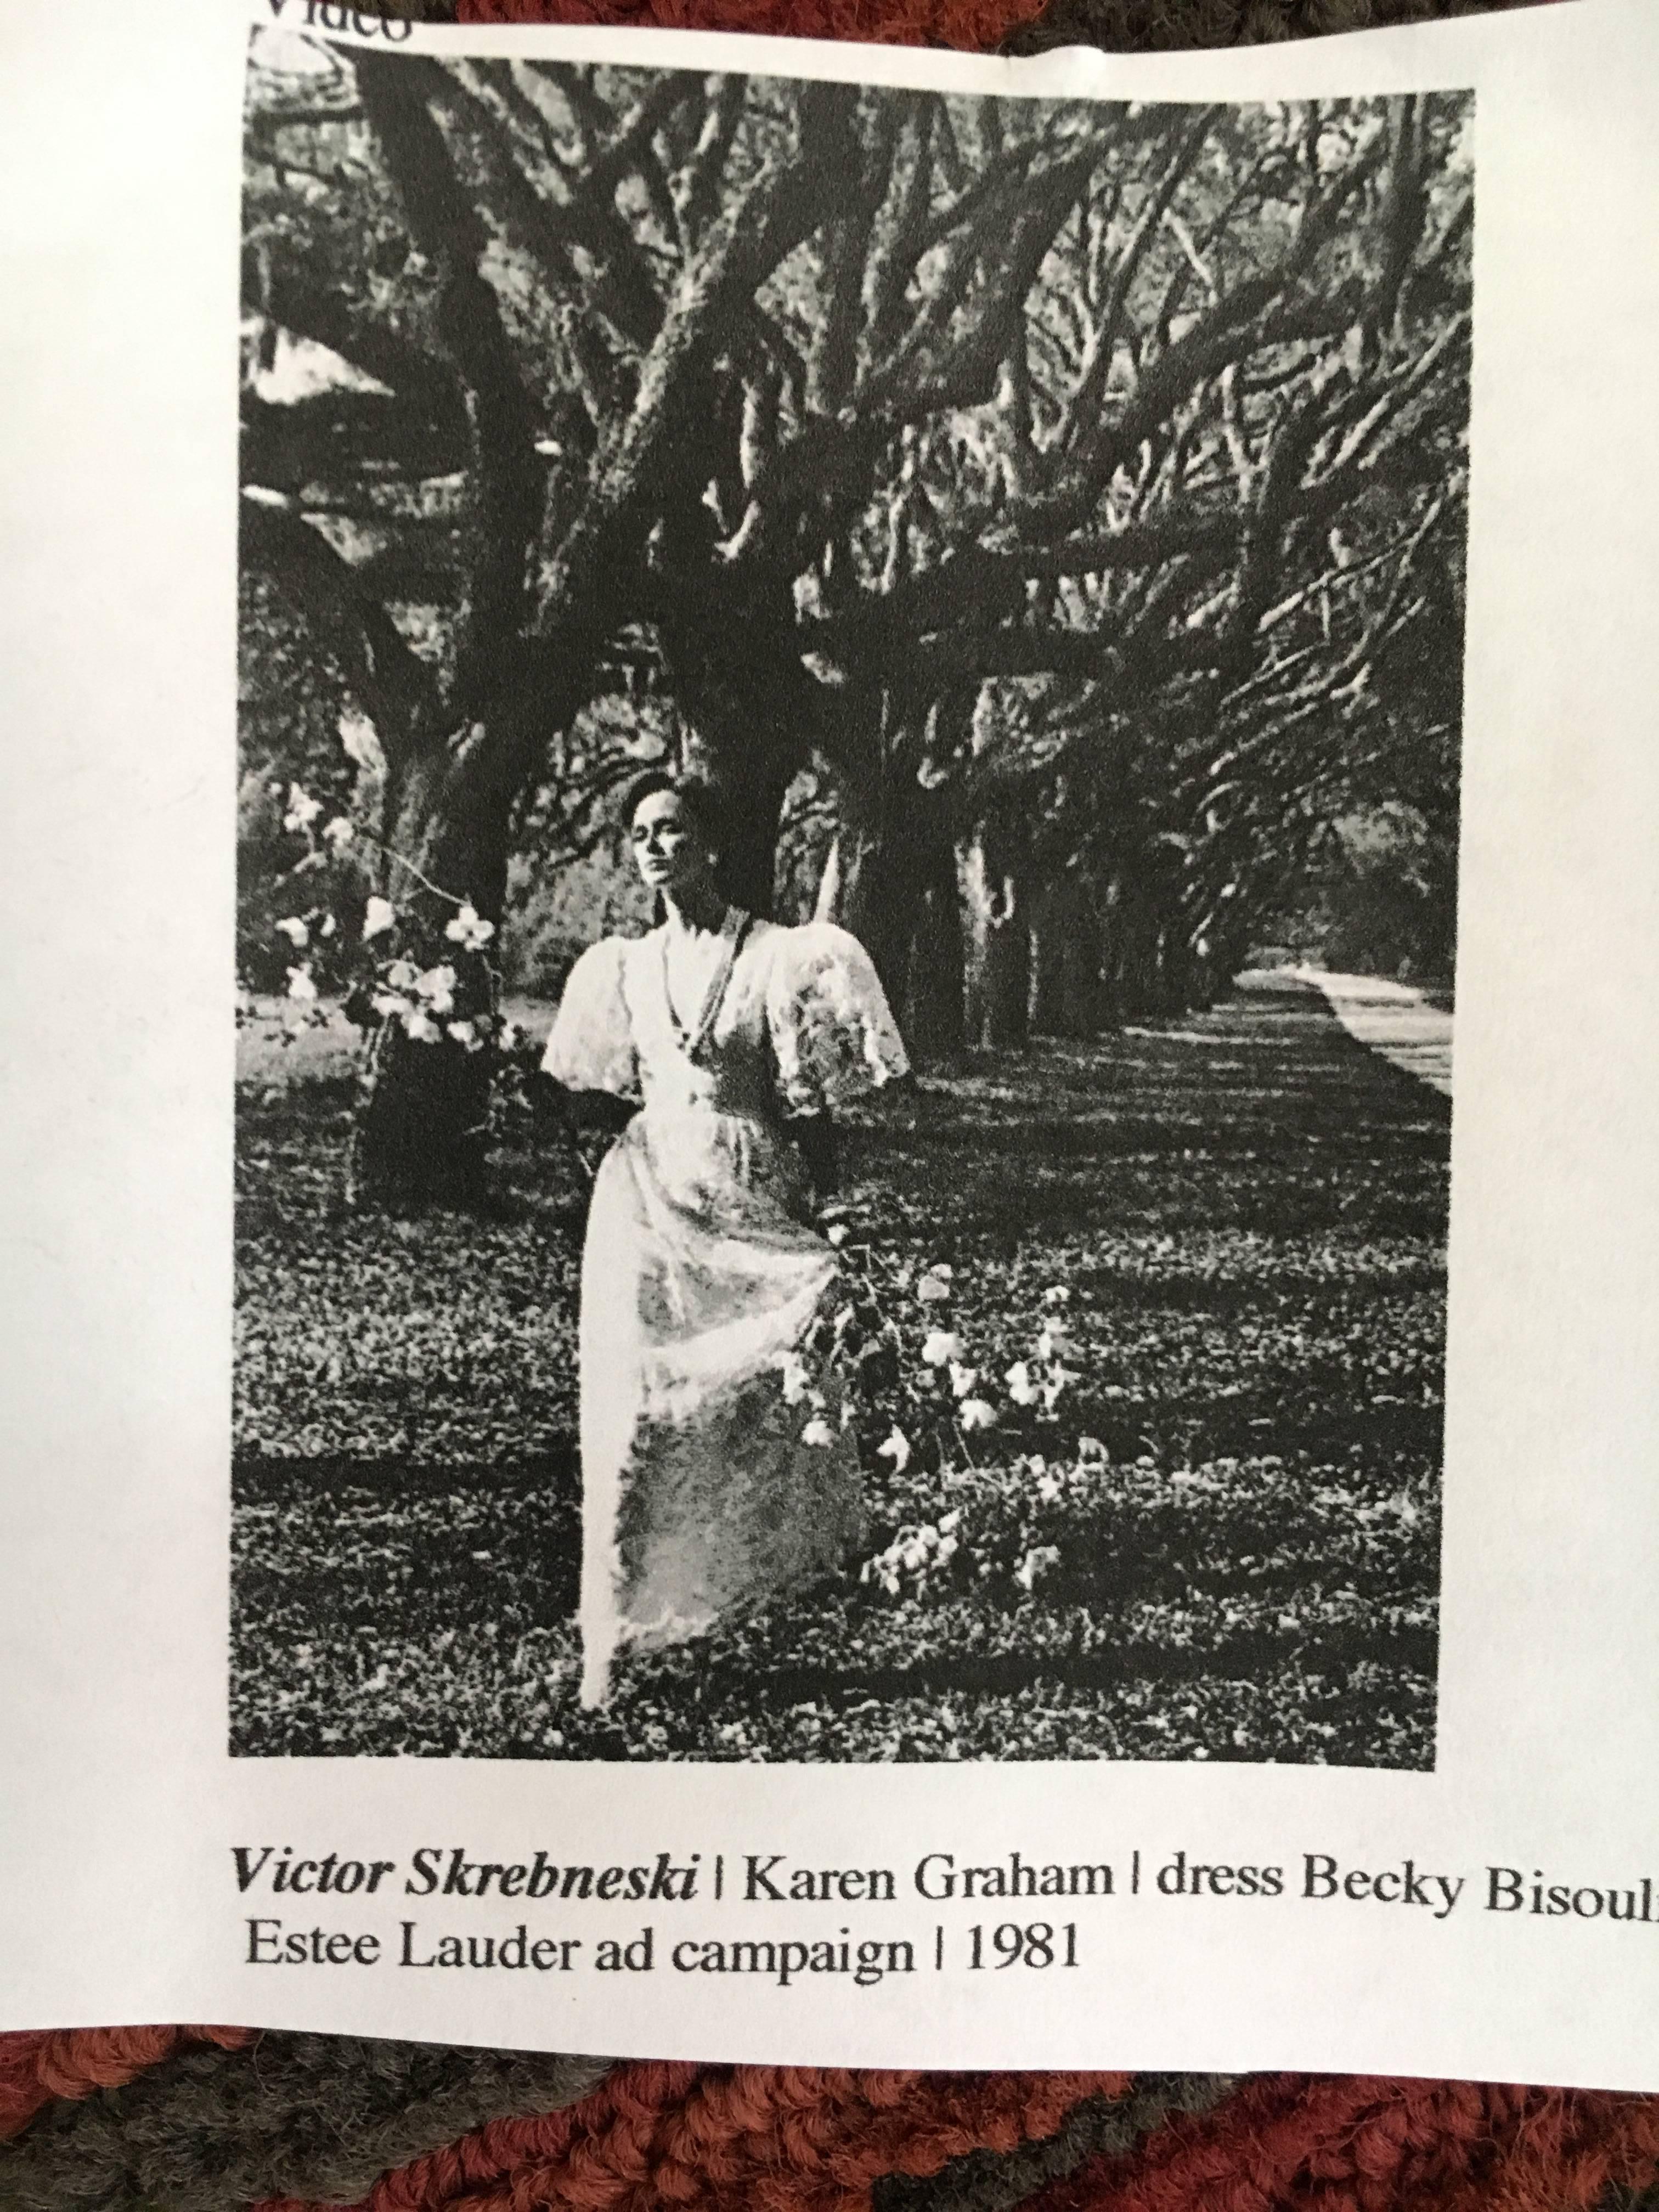 Beautiful large format black and white original photograph of Karen Graham wearing Becky Bissoulis by Victor Skrebneski , 1981.
Featured in an Estee Lauder ad.
16